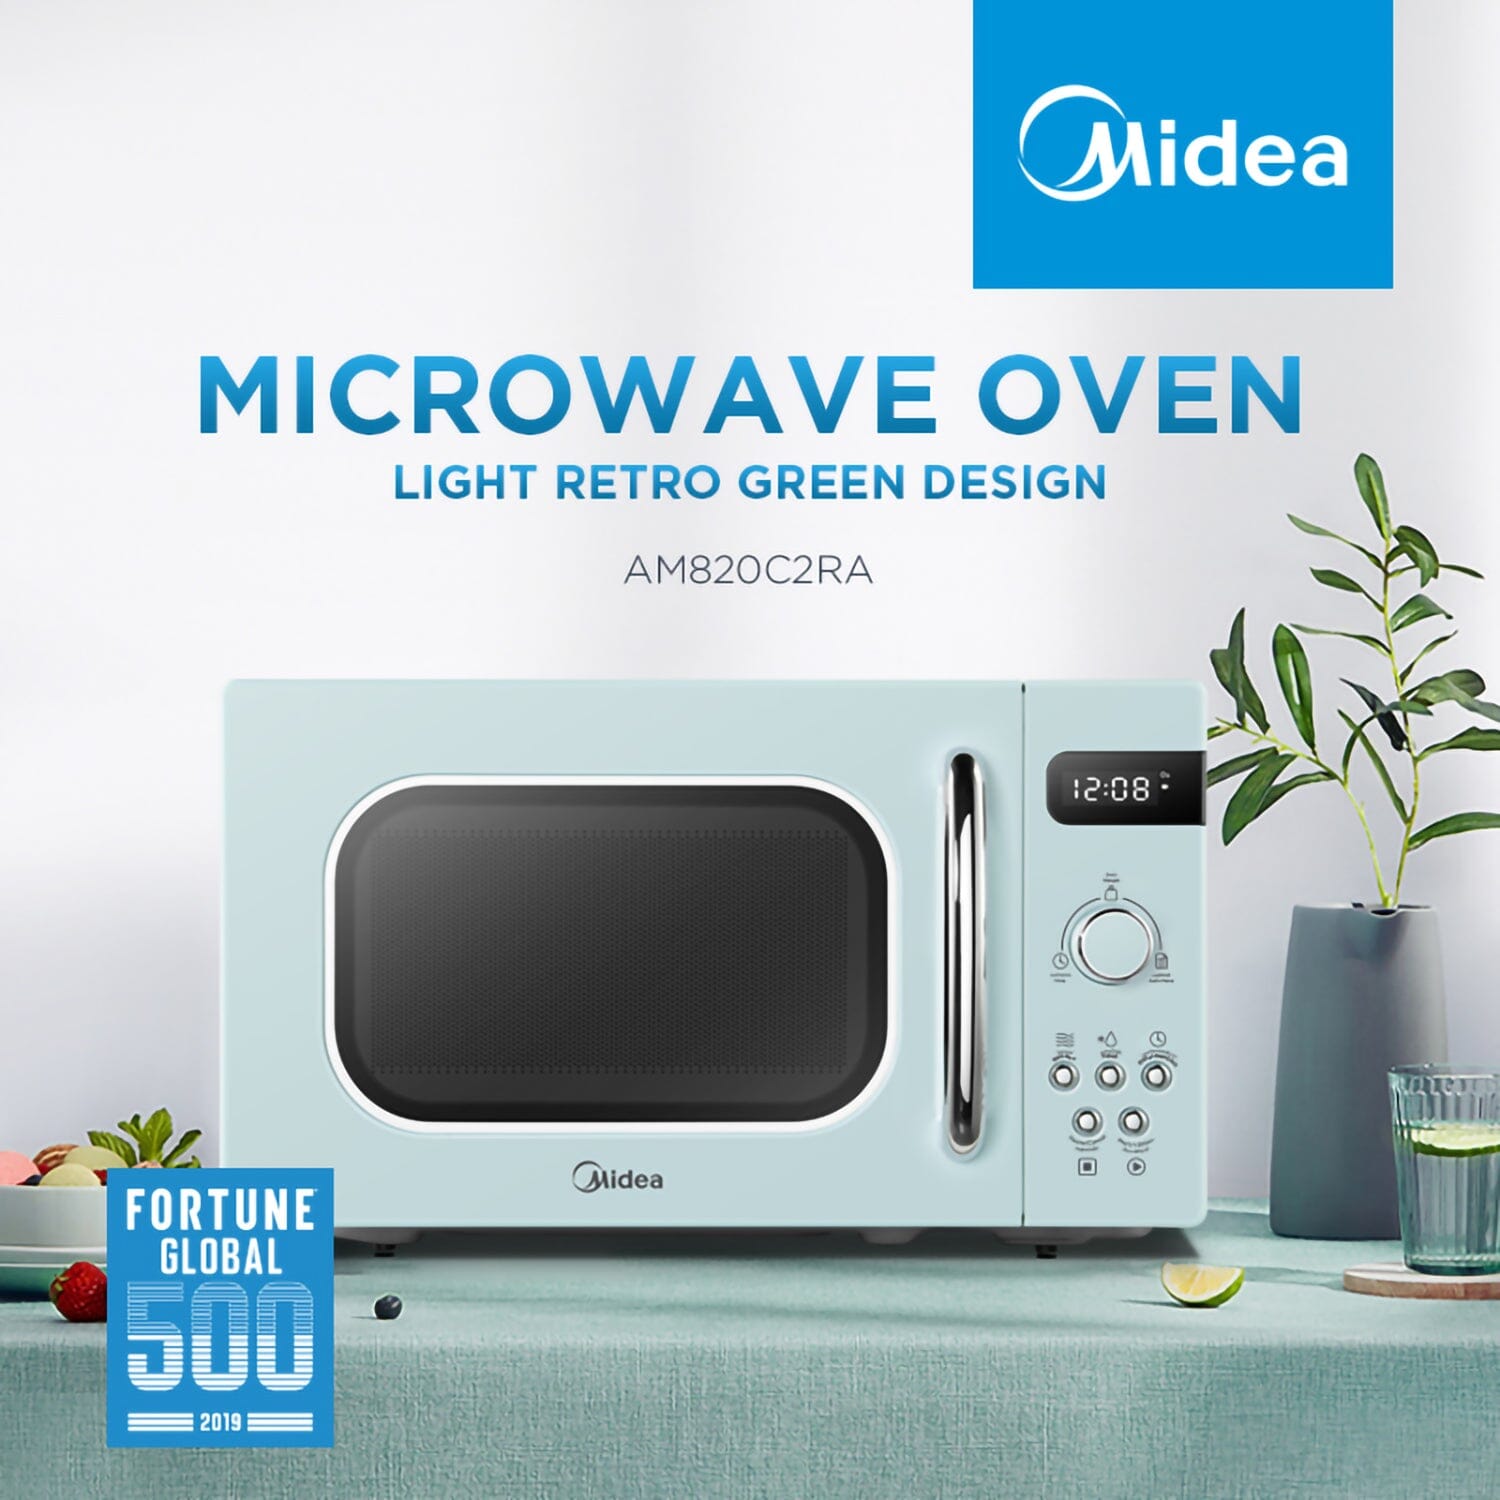 Midea 20L AM820C2RA Microwave Oven Oven Toshiba 